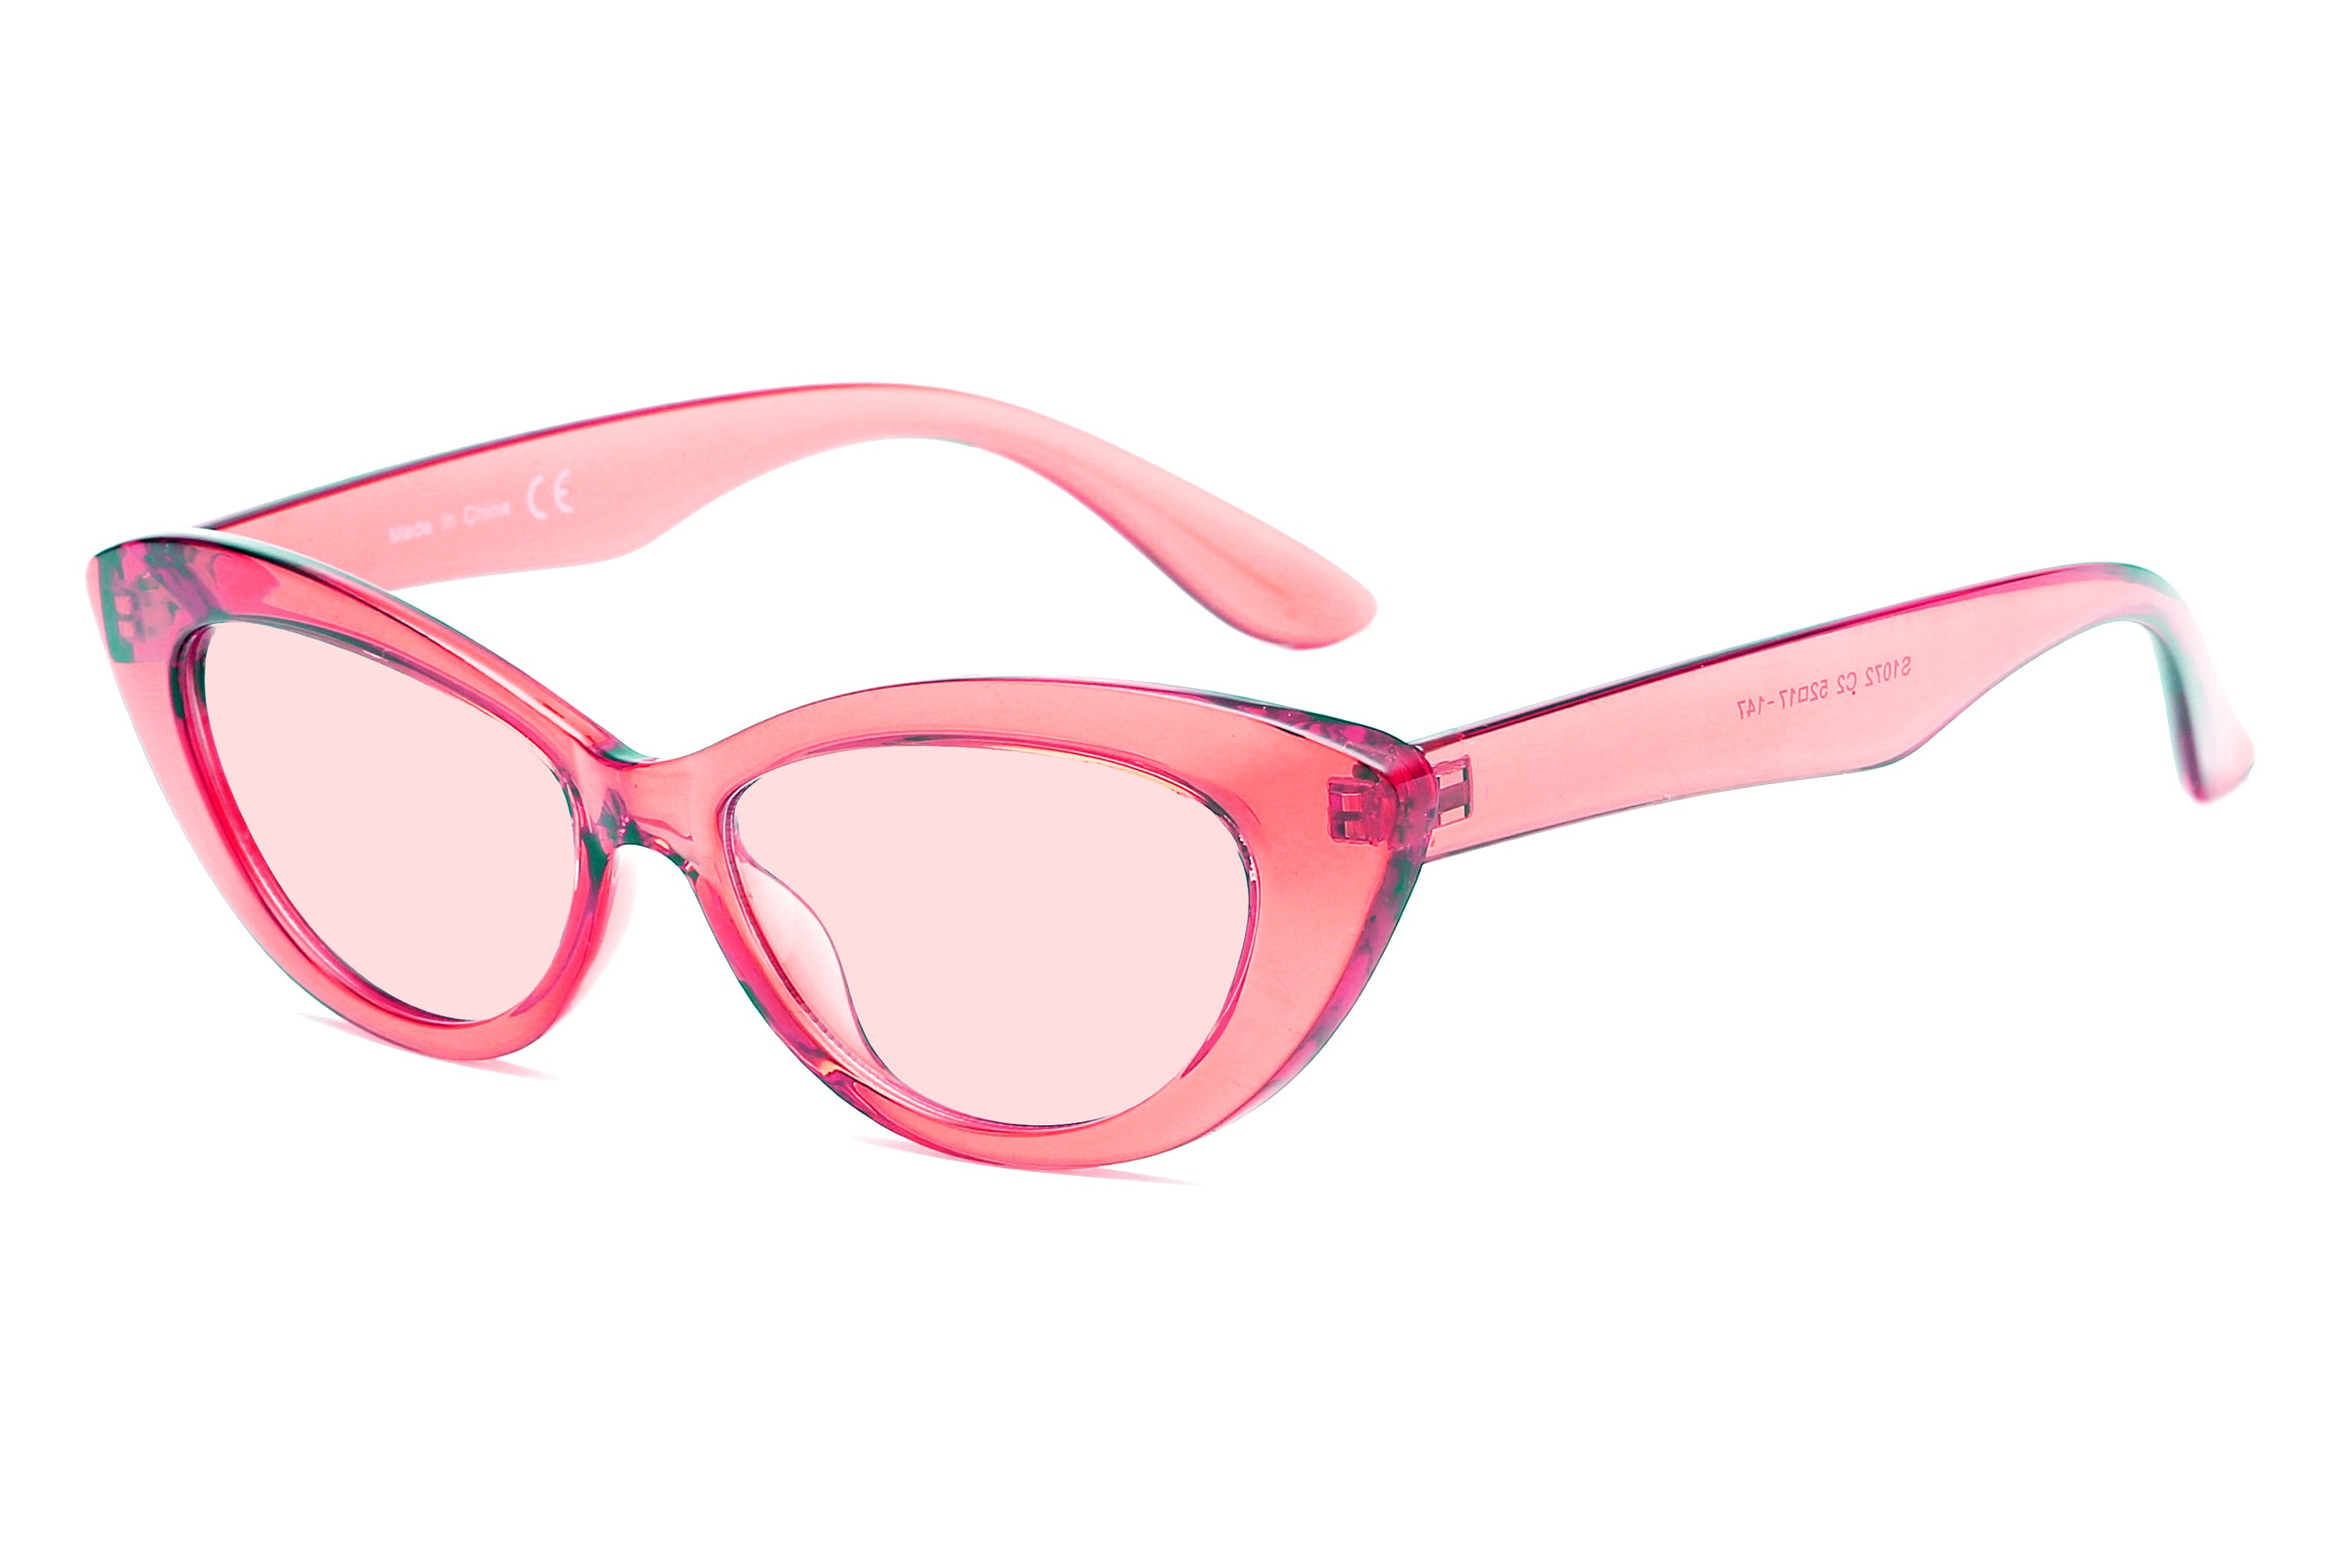 S1072 - Women Retro Cat Eye SUNGLASSES Clear Pink